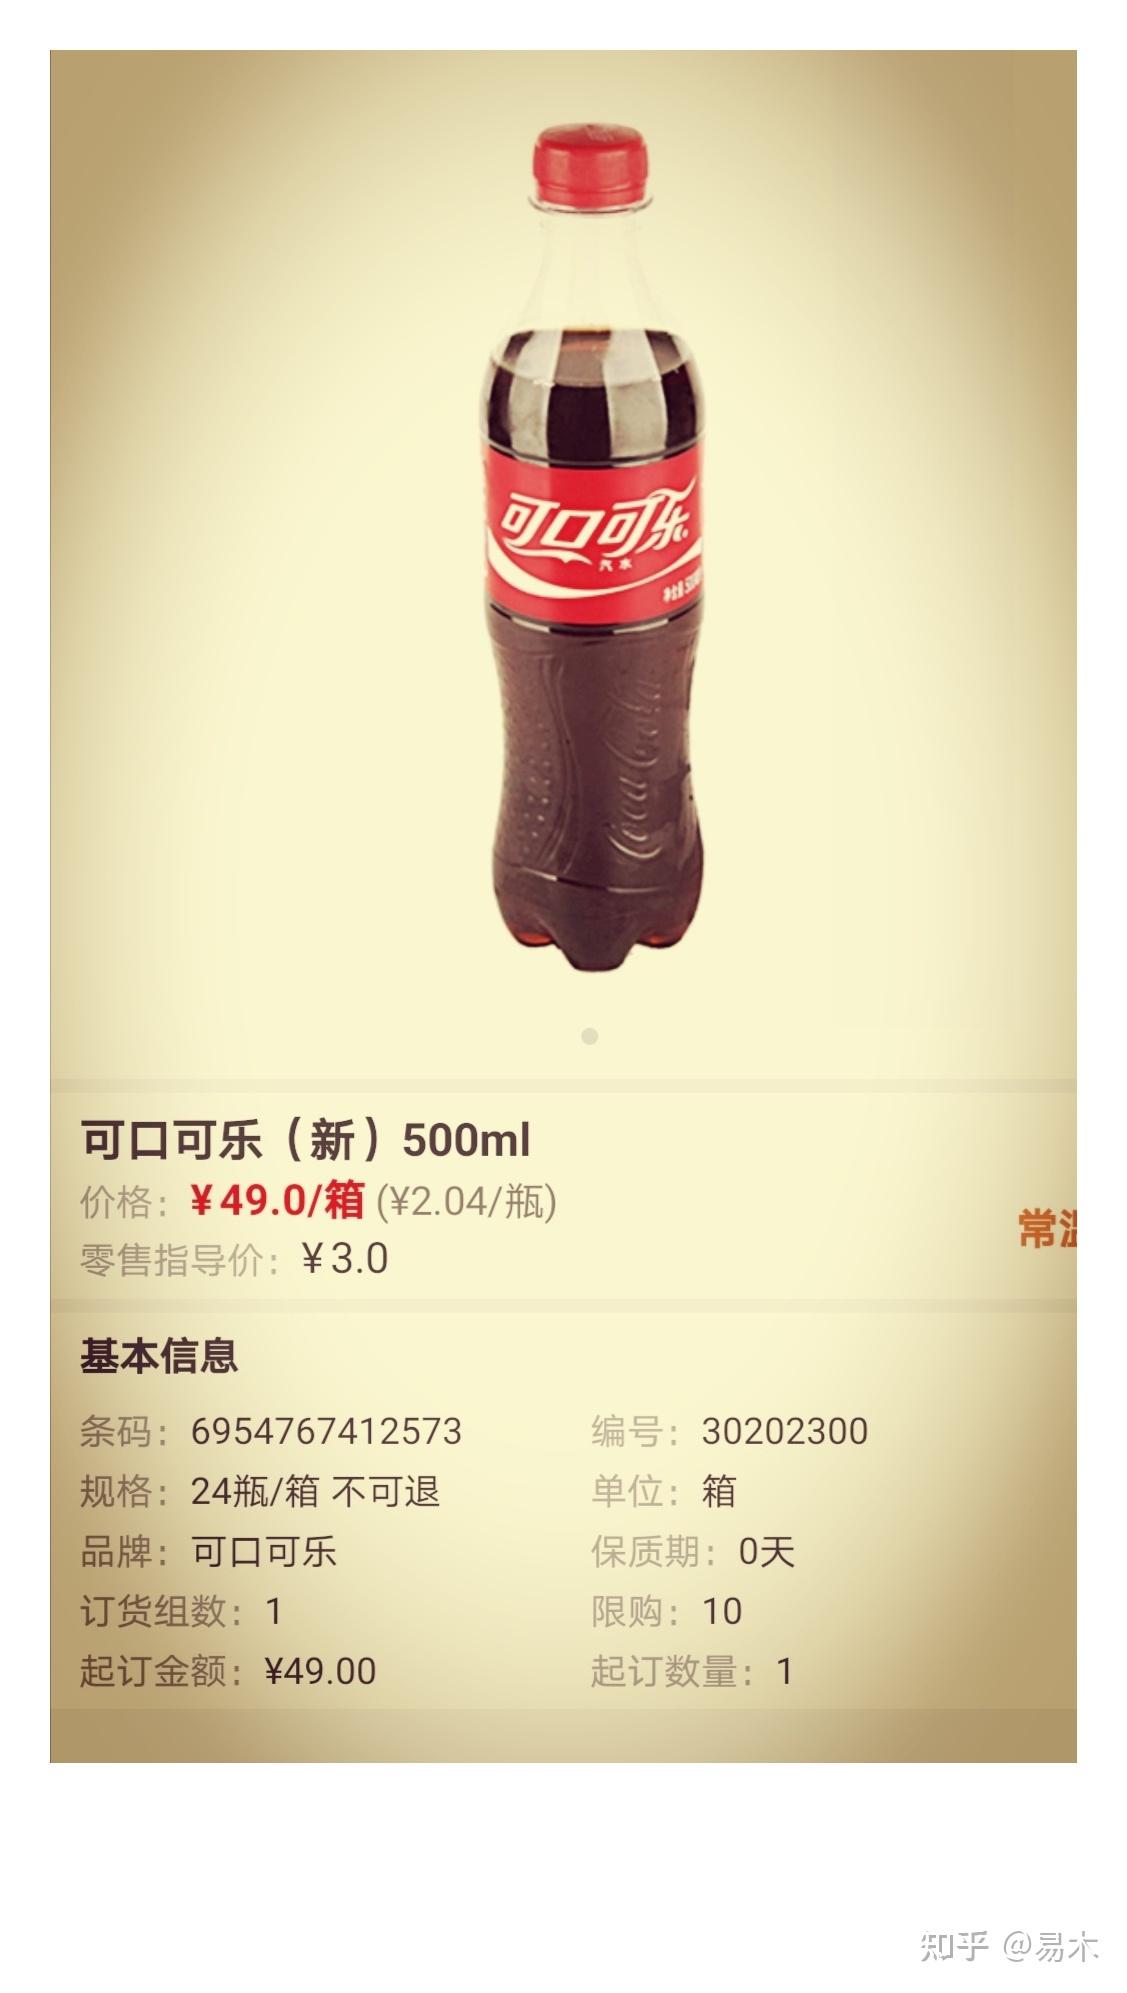 500ml普通可口可乐的超市进货价是多少? 